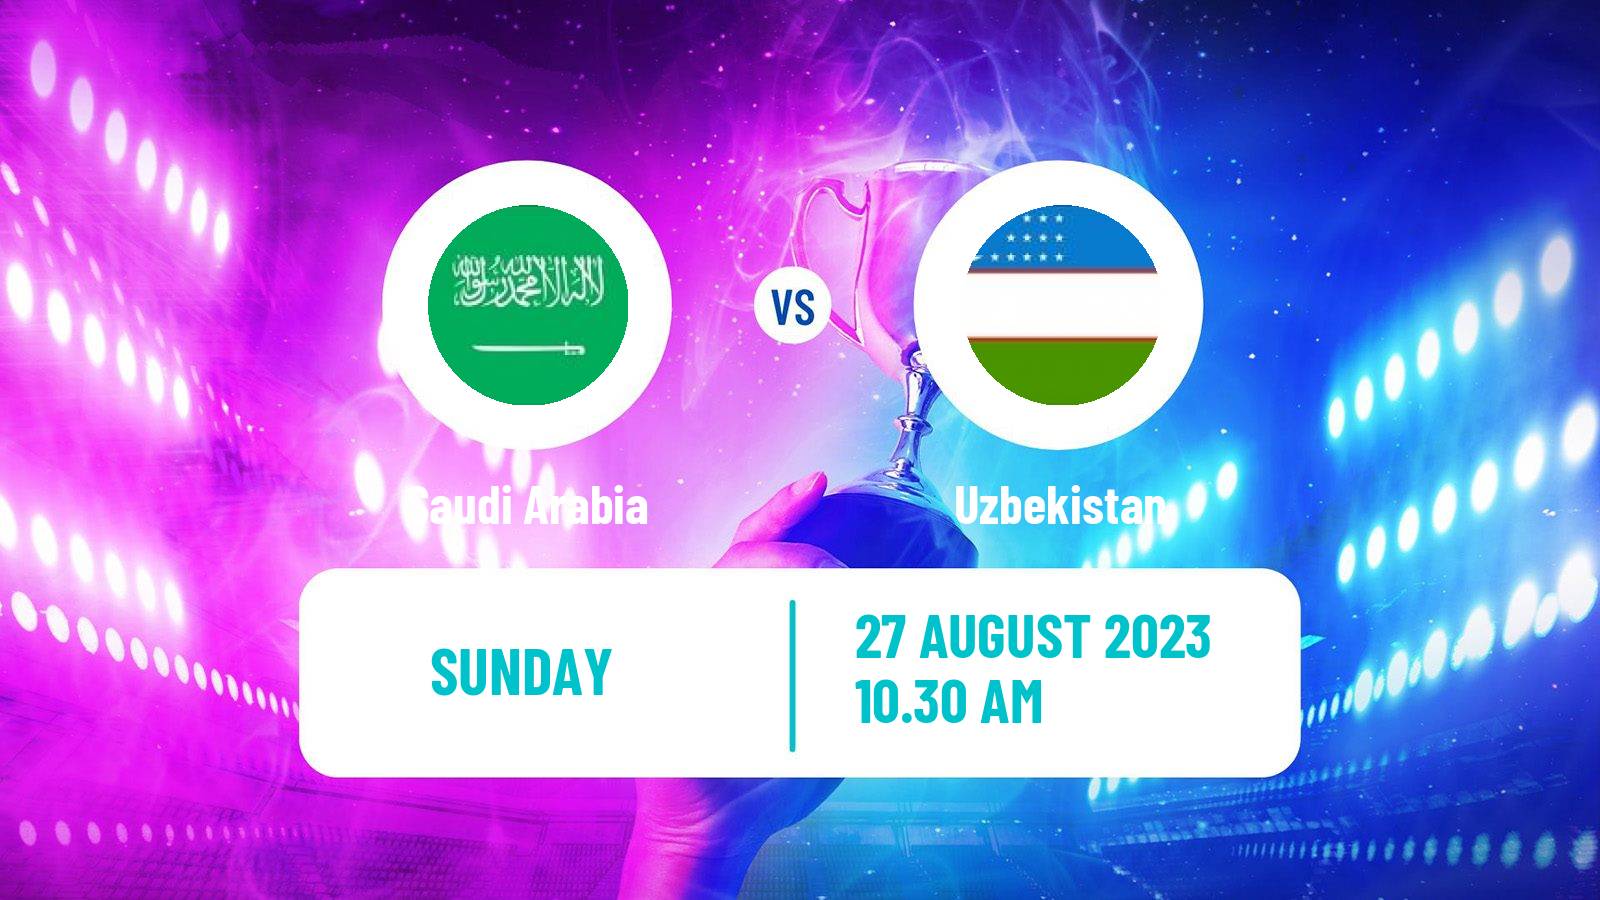 Esports Counter Strike Iesf World Esports Championship Saudi Arabia - Uzbekistan